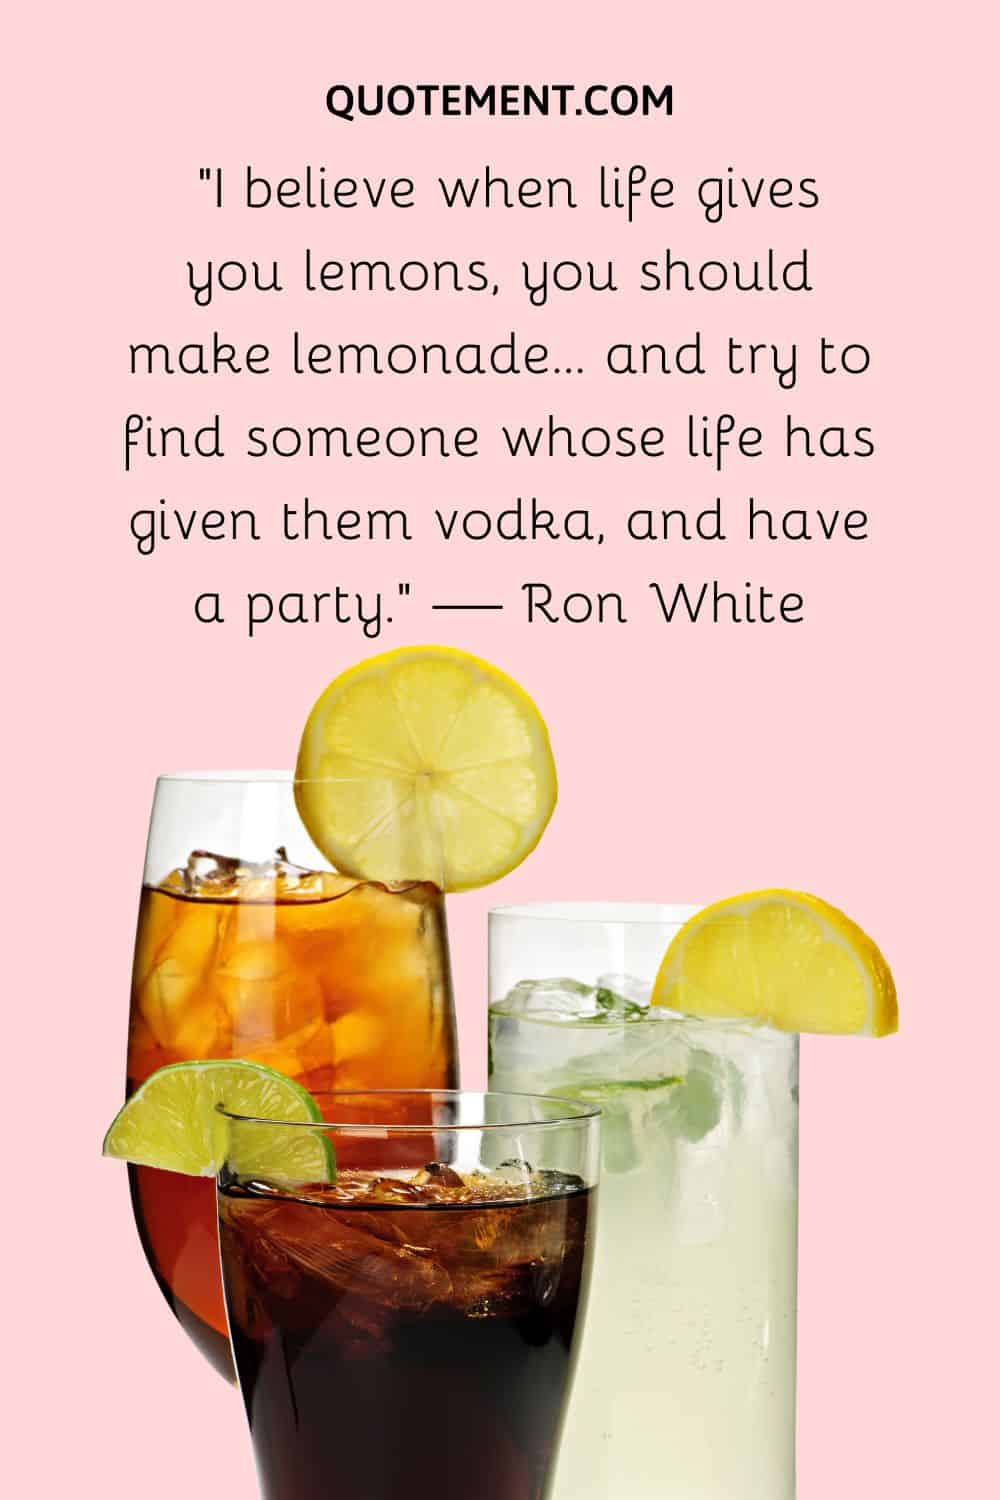 I believe when life gives you lemons, you should make lemonade